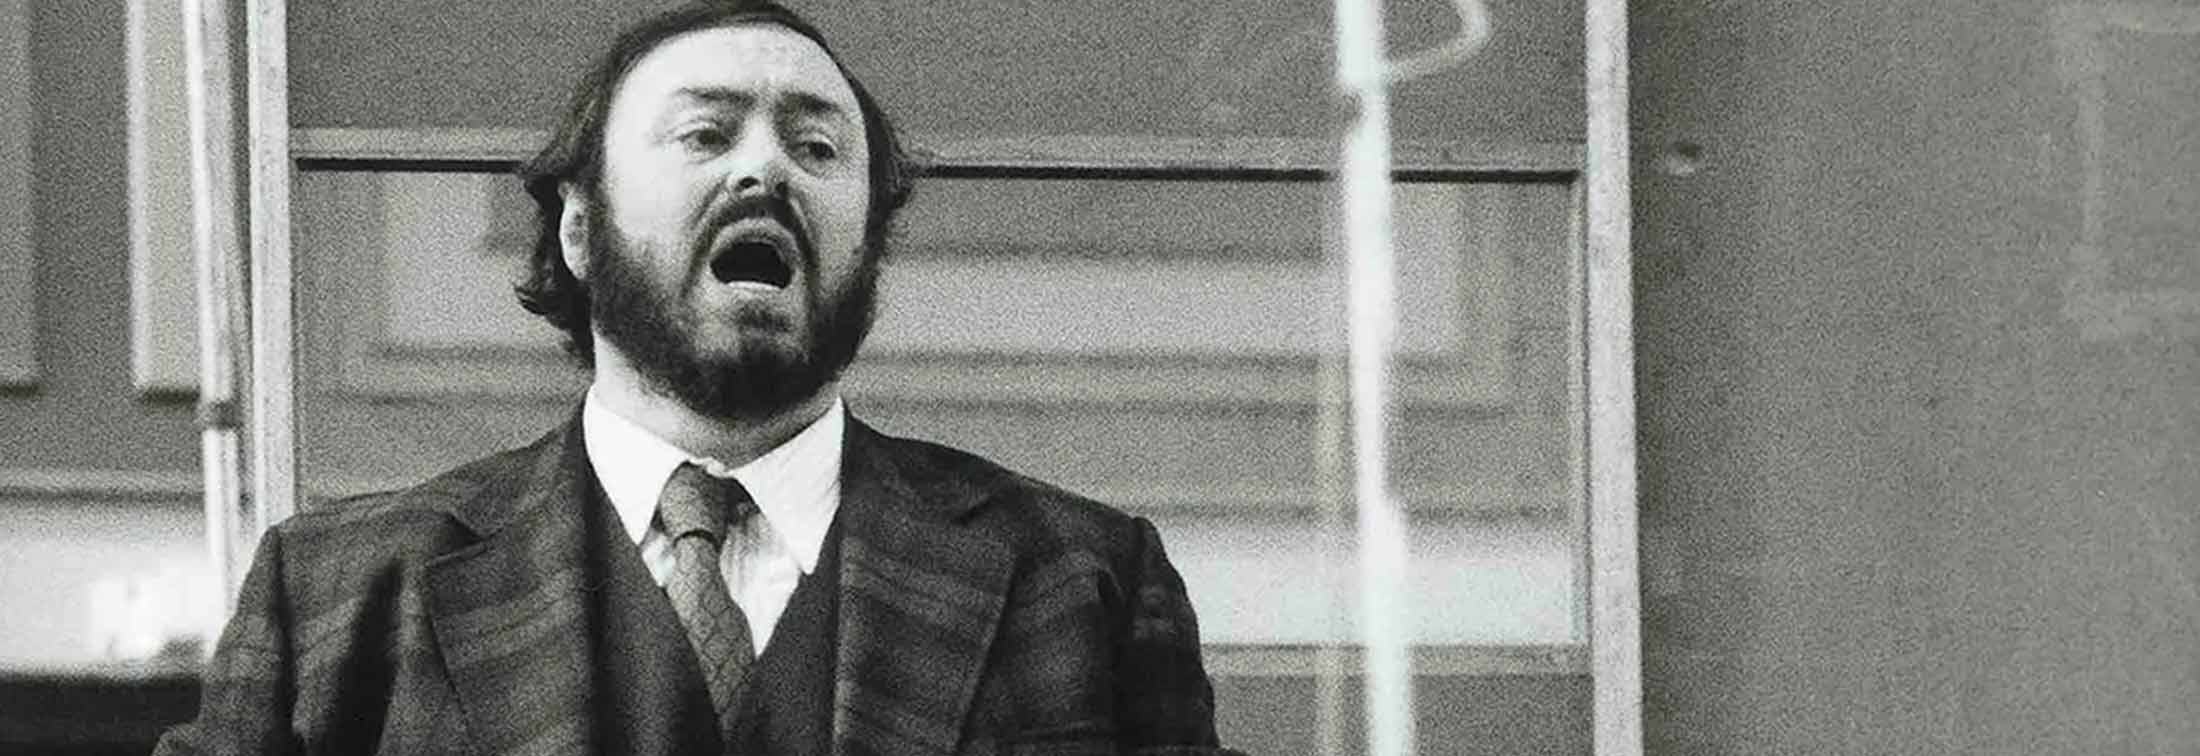 Pavarotti - A perfunctory portrait of an opera superstar